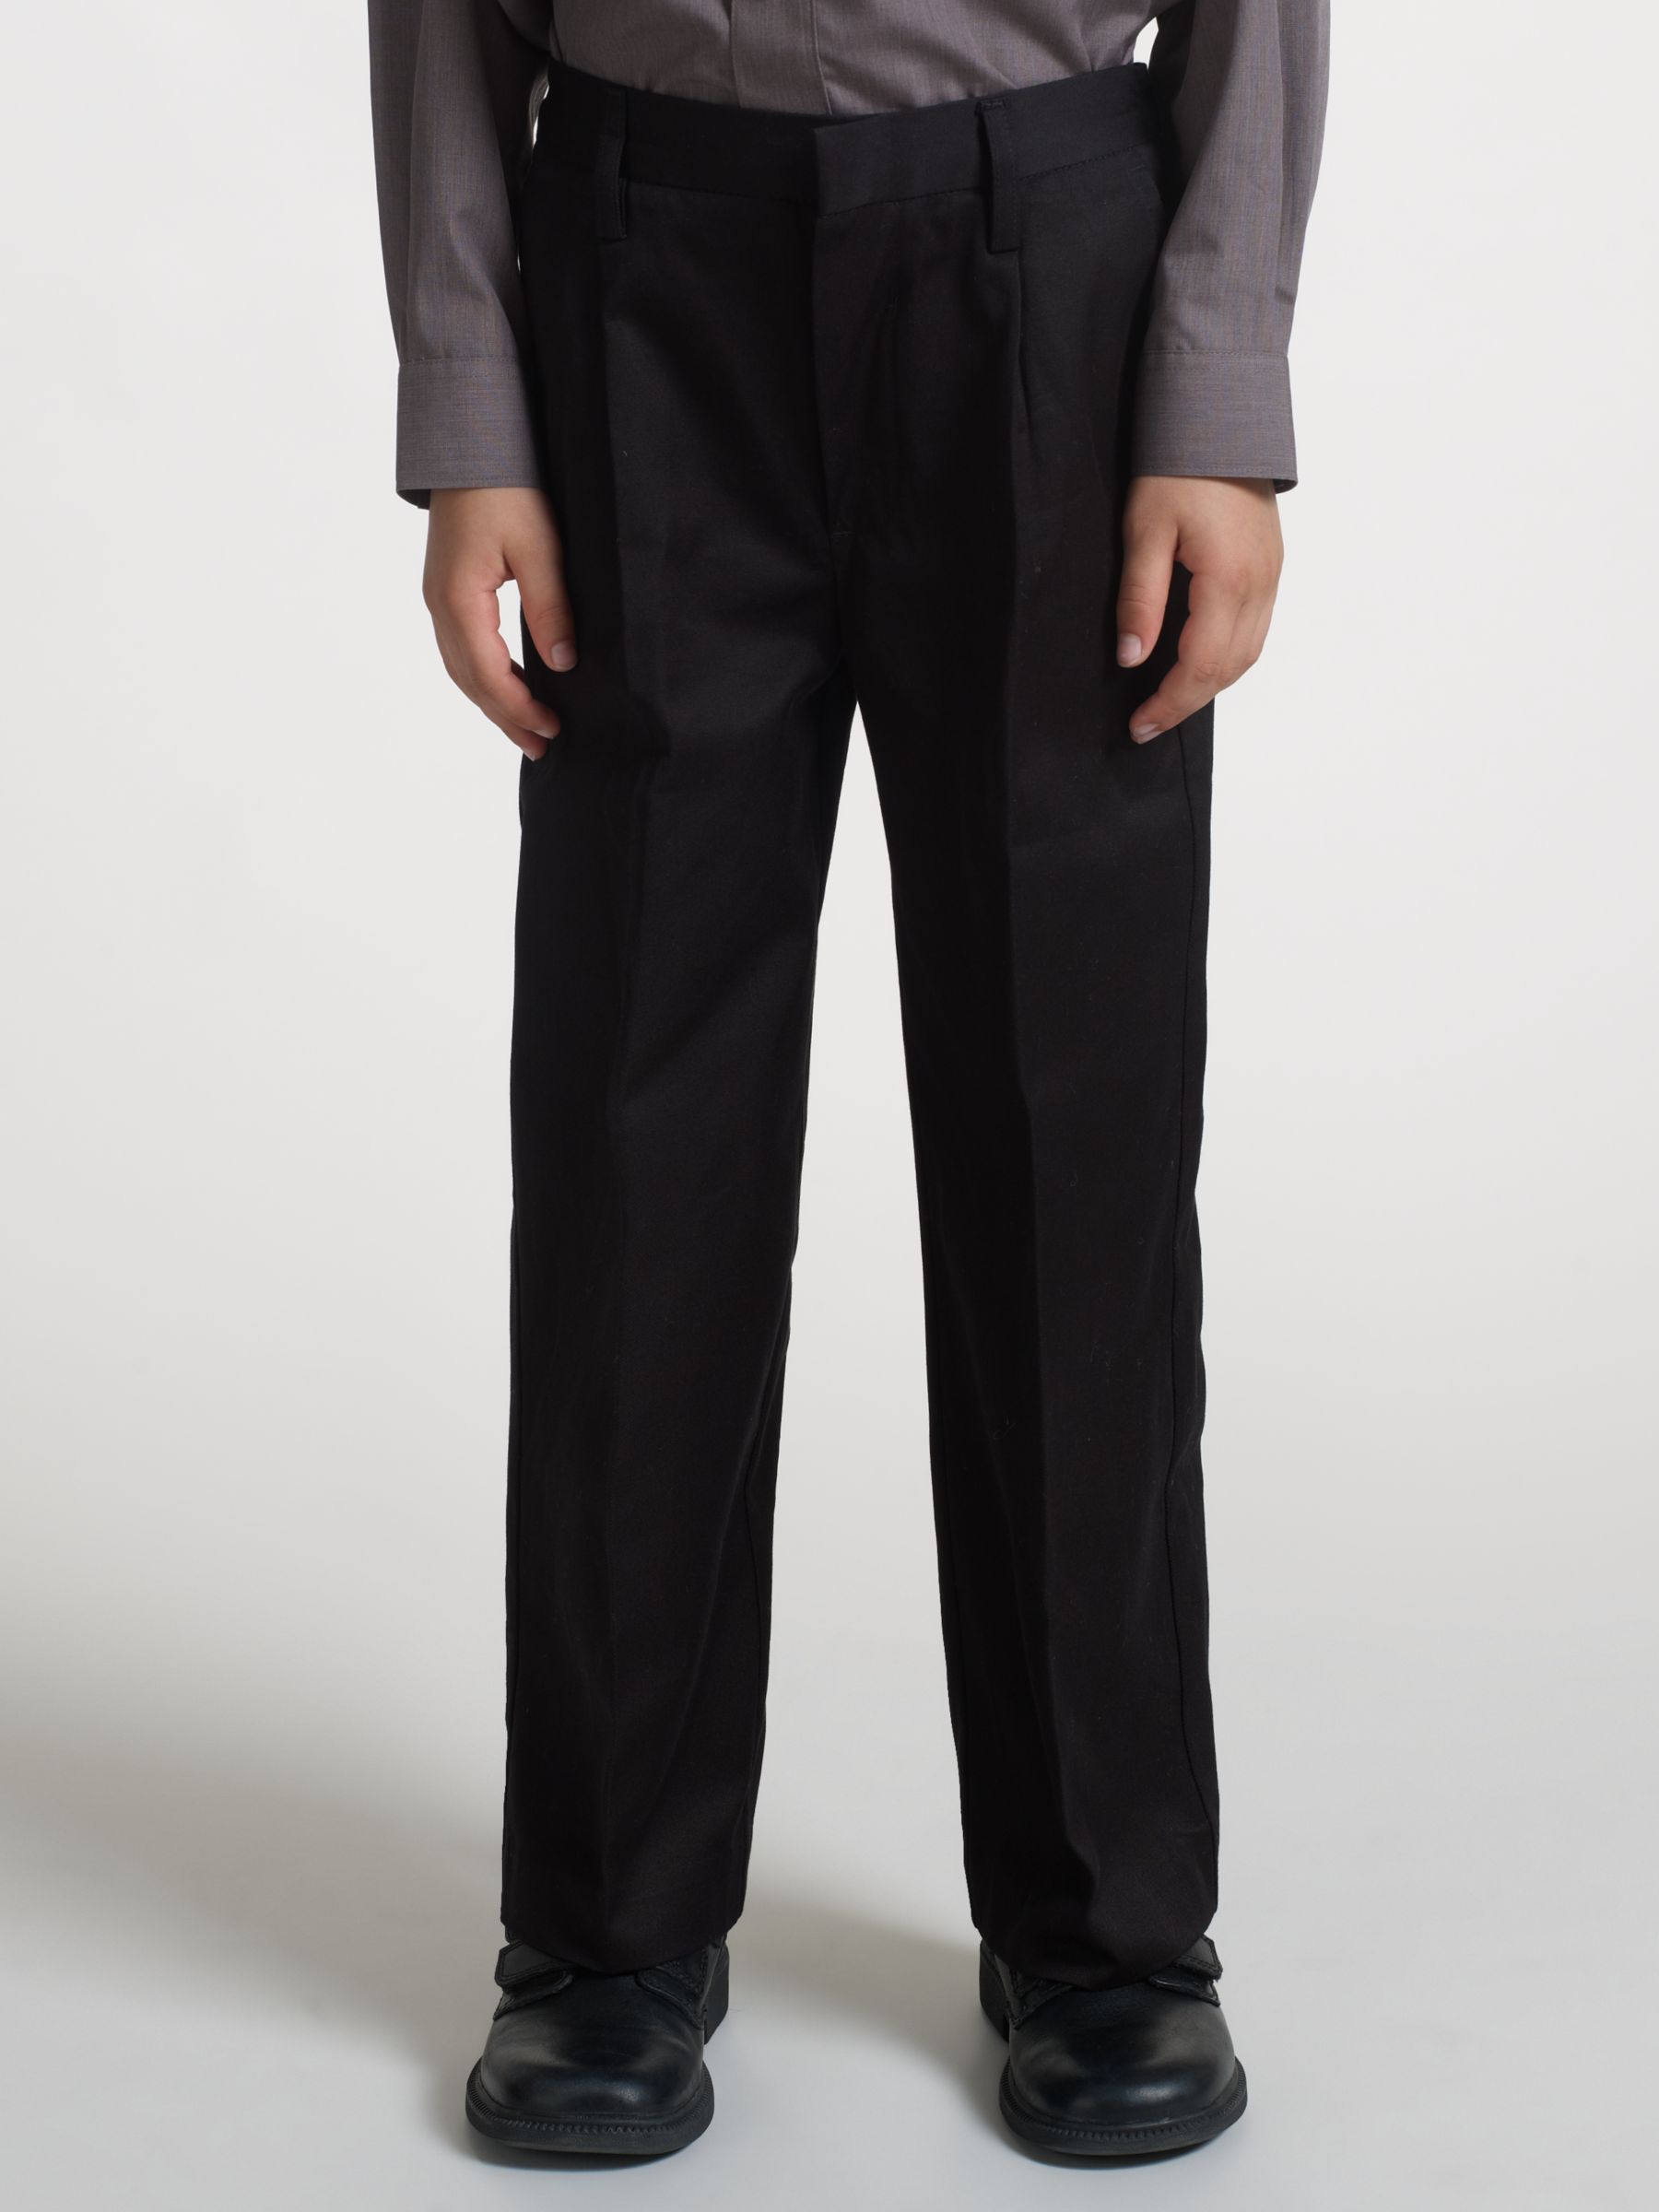 John Lewis & Partners Boys' Pure Cotton Adjustable Waist Straight Leg School Trousers, Black, 10 years